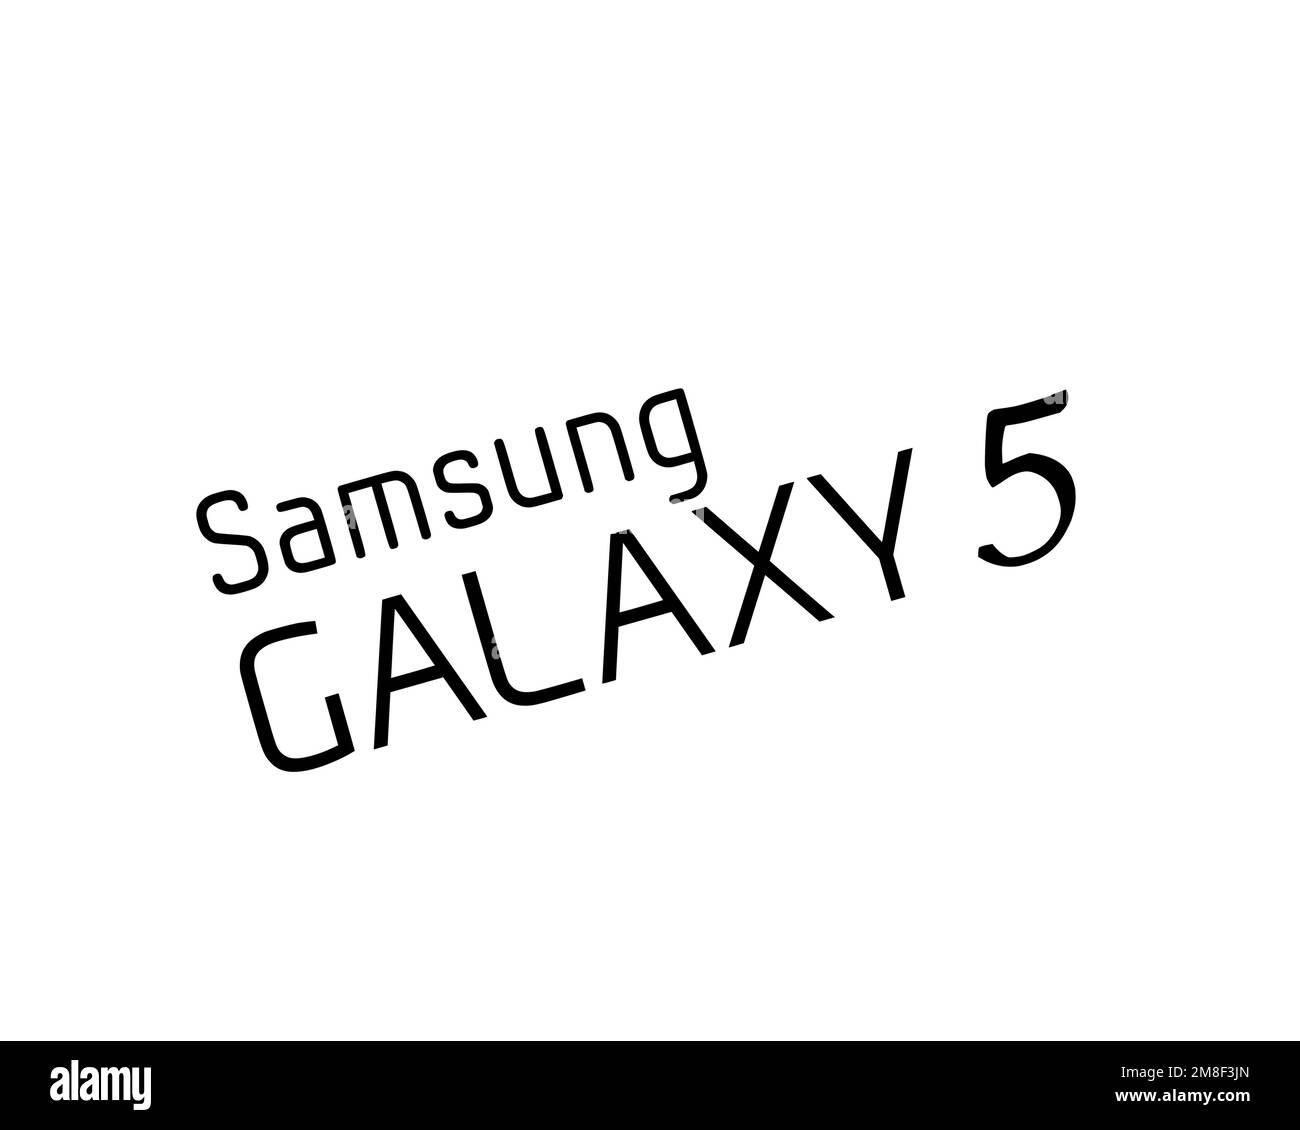 Samsung Galaxy 5, rotated logo, white background Stock Photo